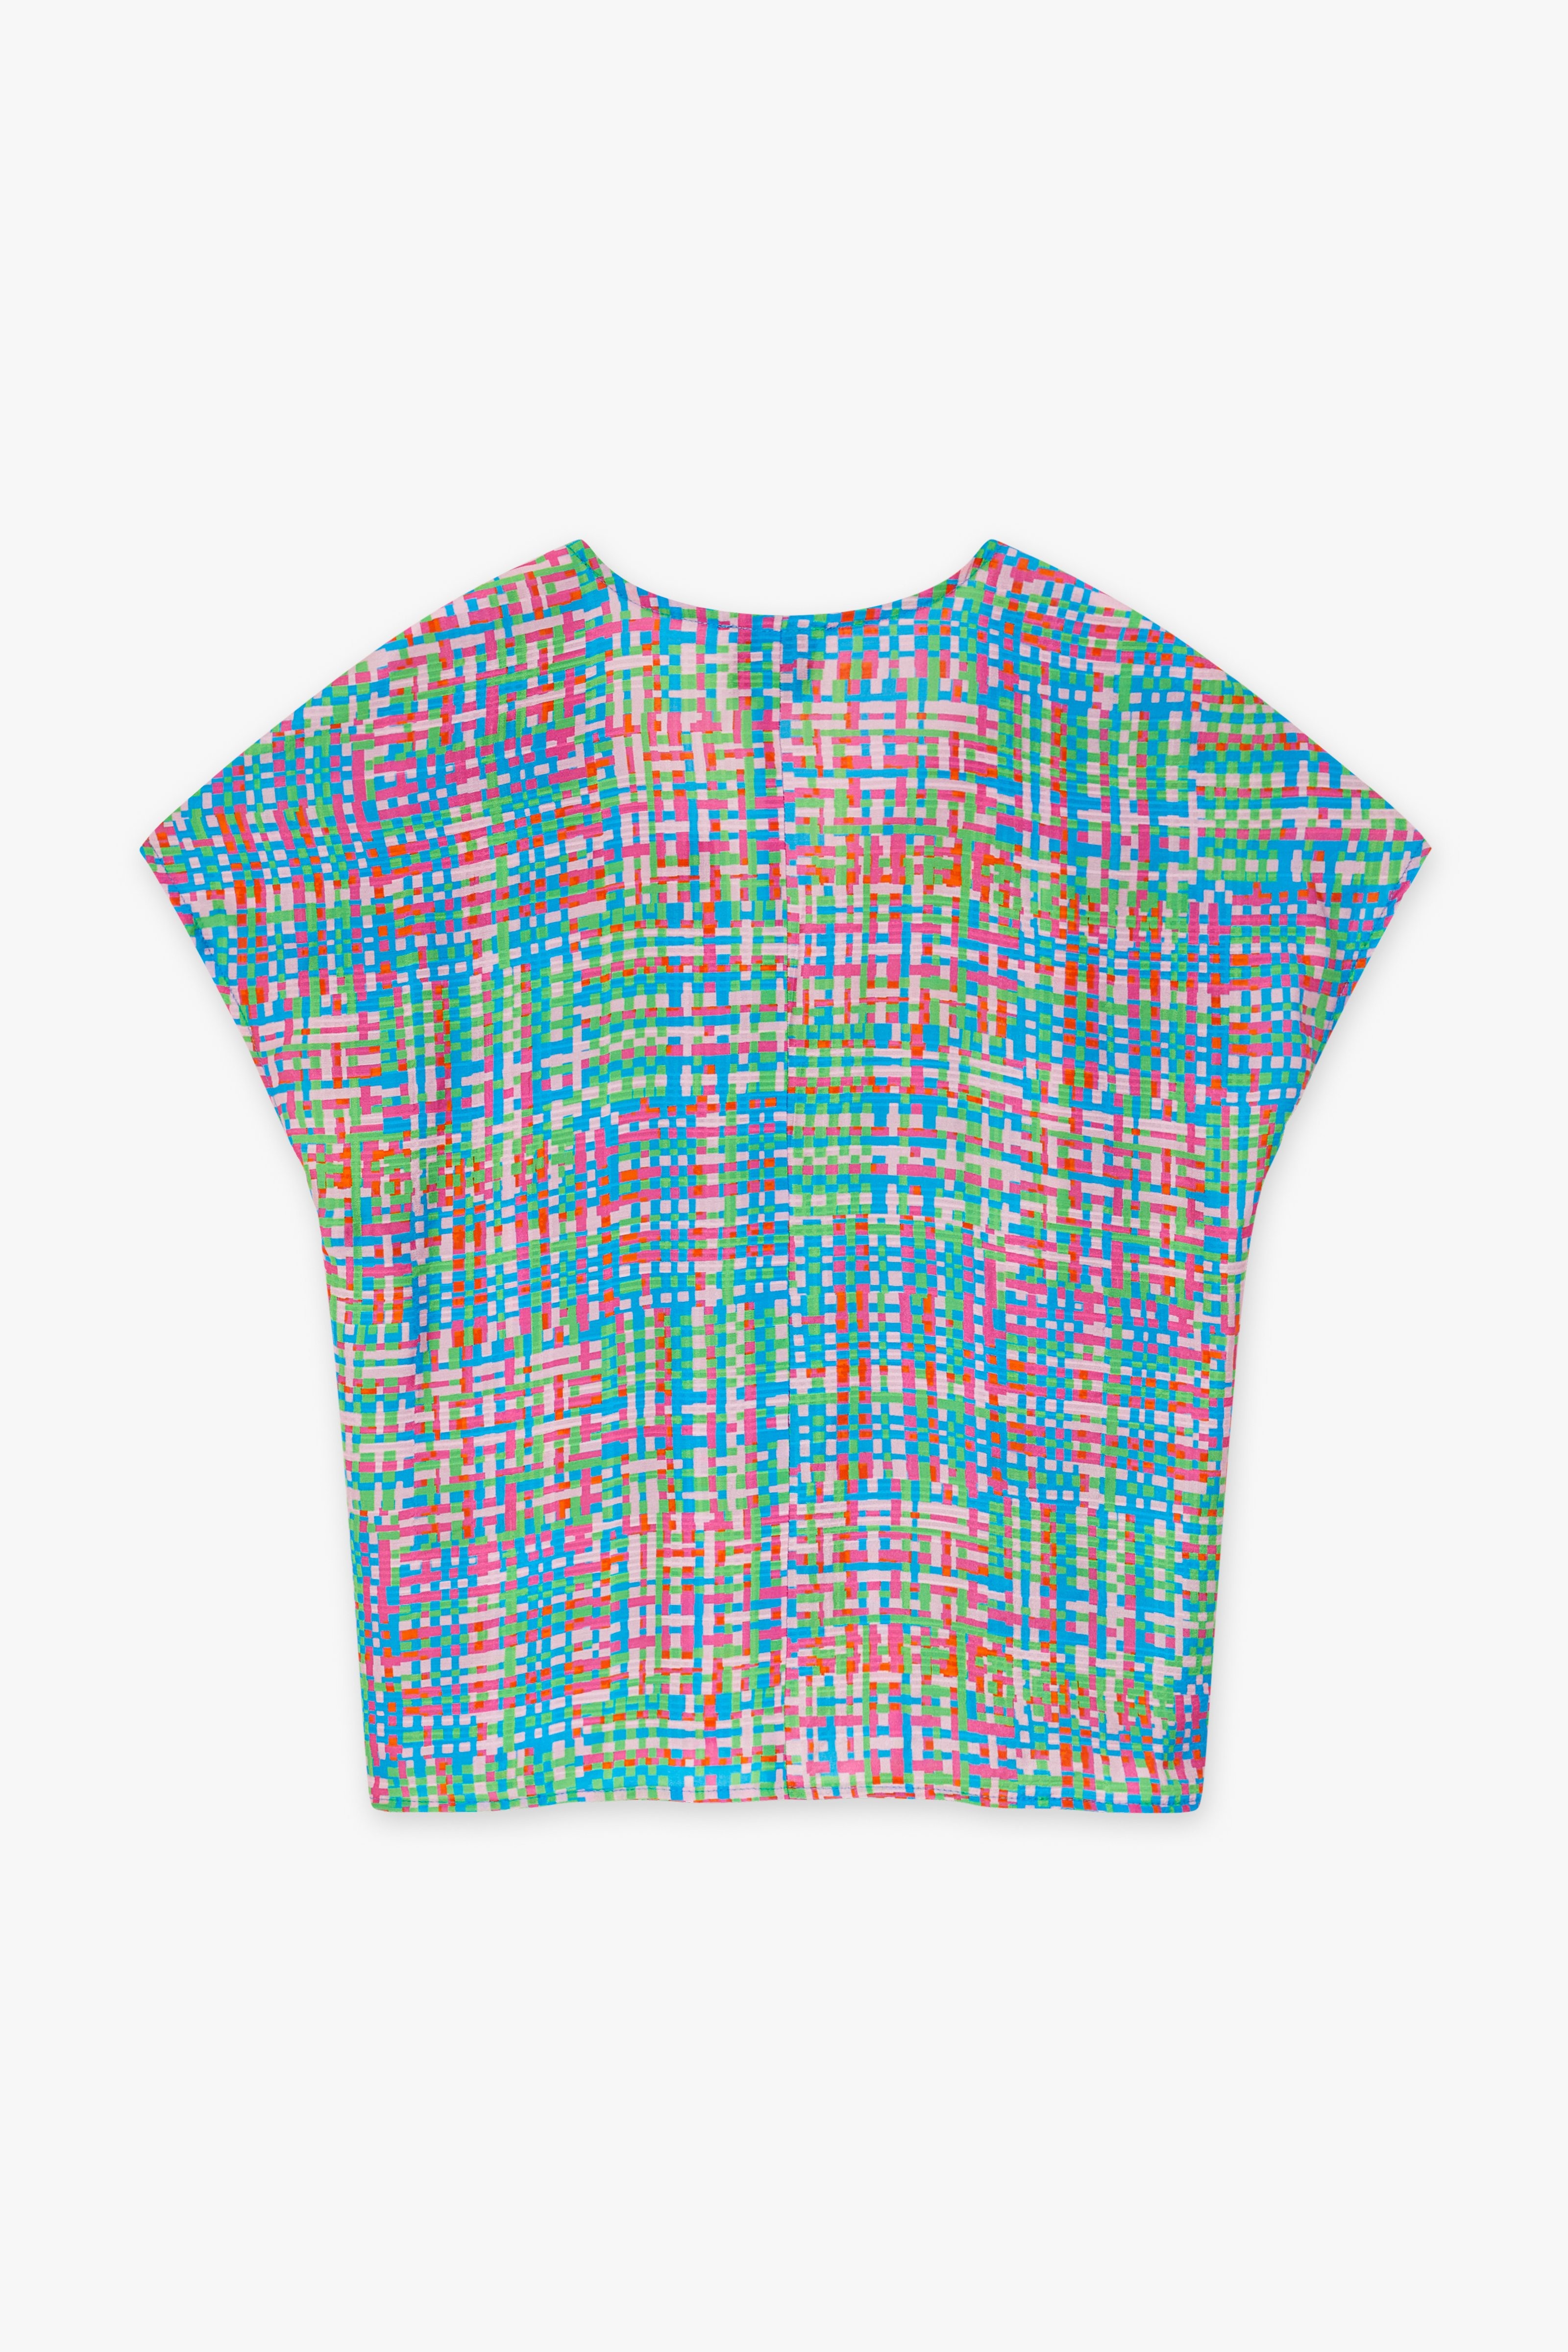 CKS Dames - SILVAN - blouse long sleeves - multicolor